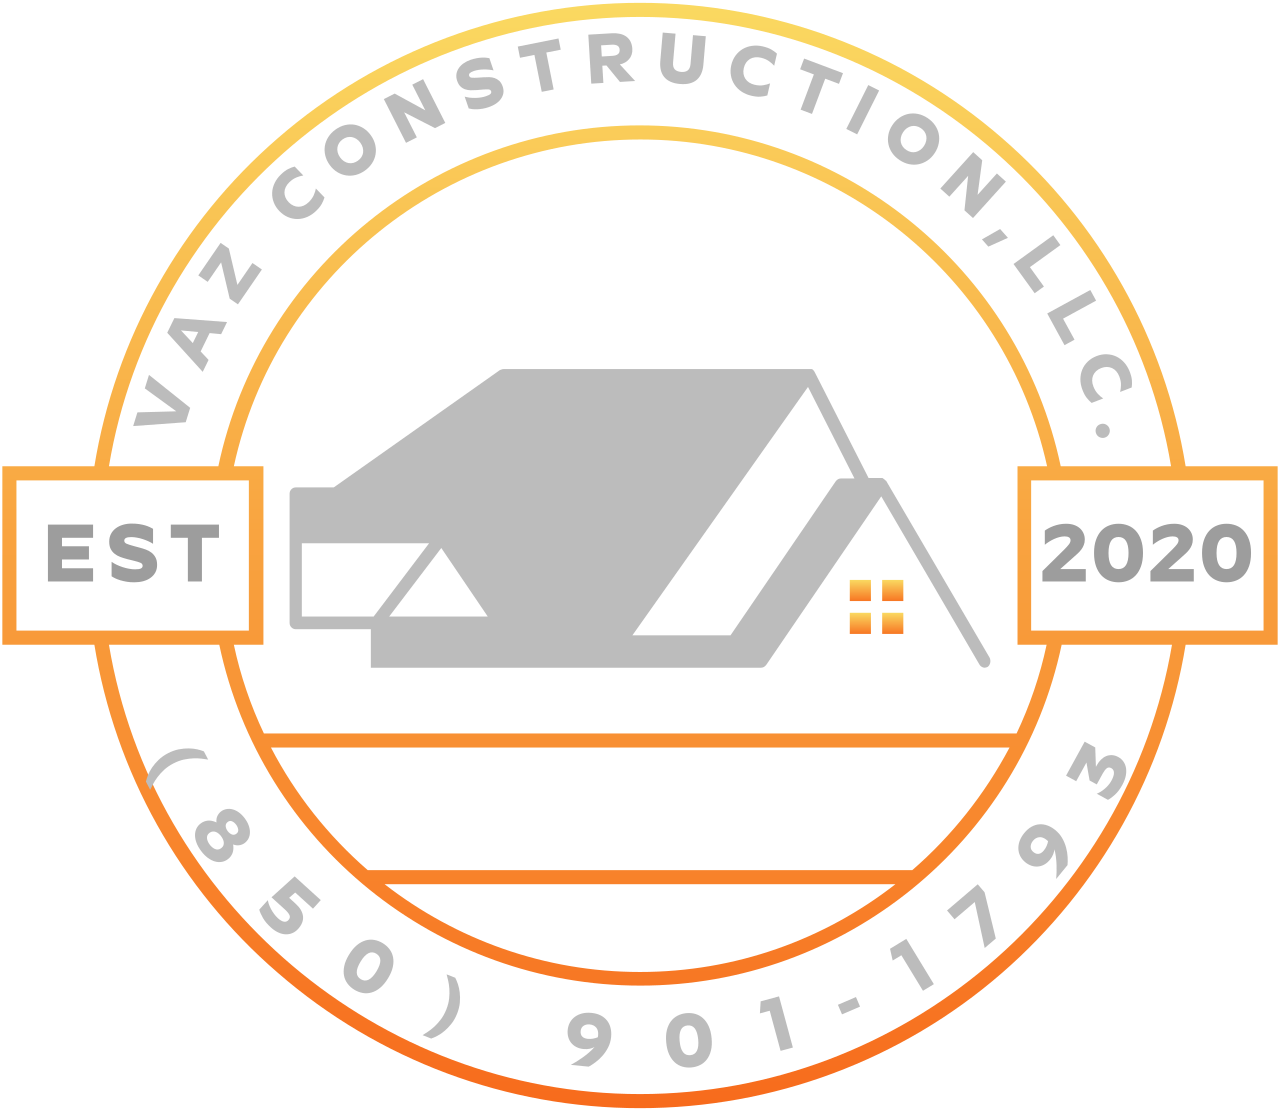 VAZ CONSTRUCTION,LLC.'s web page